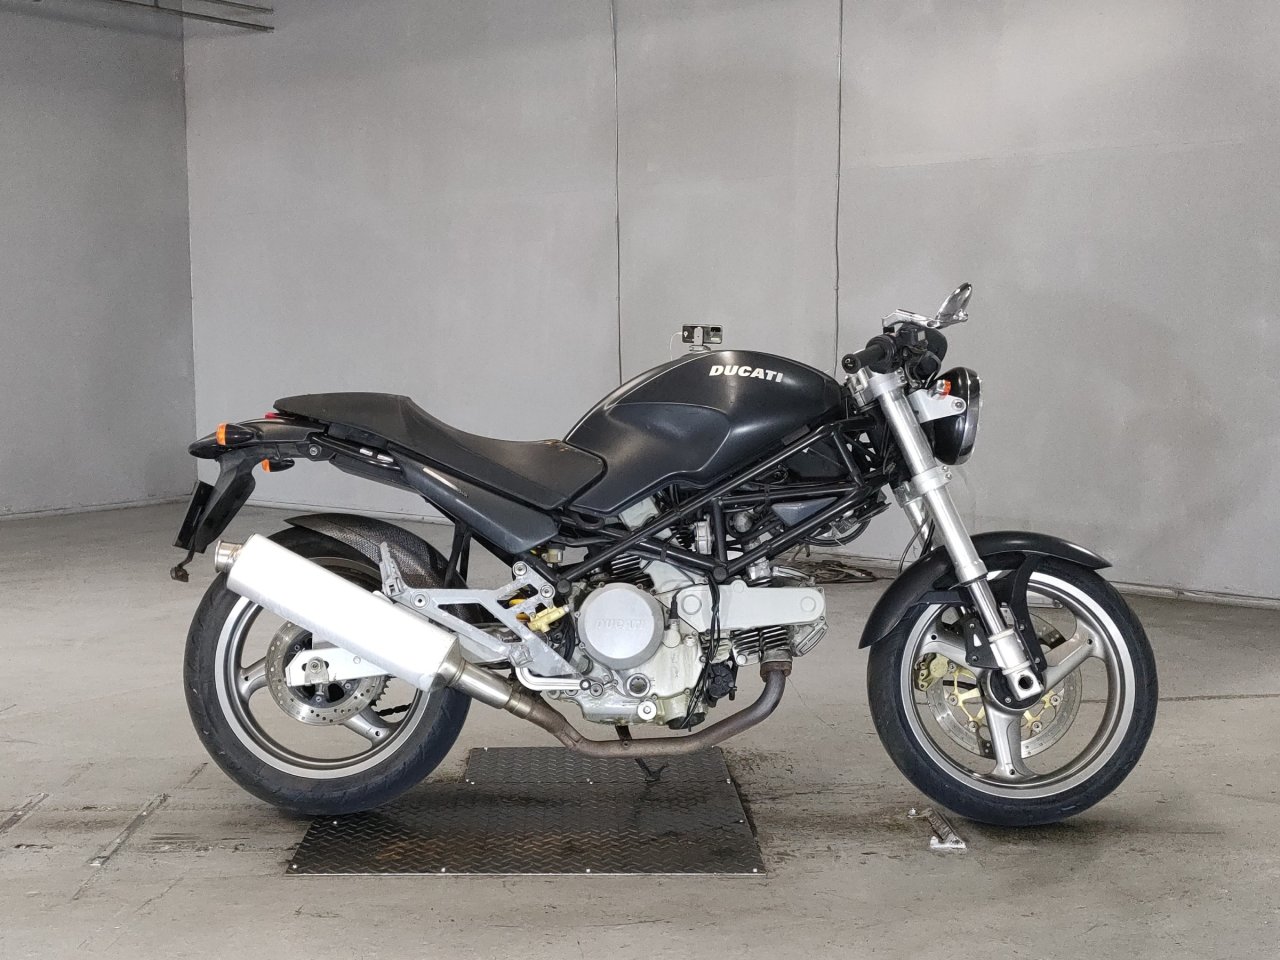 Ducati Monster 400 - Adamoto - Motorcycles from Japan